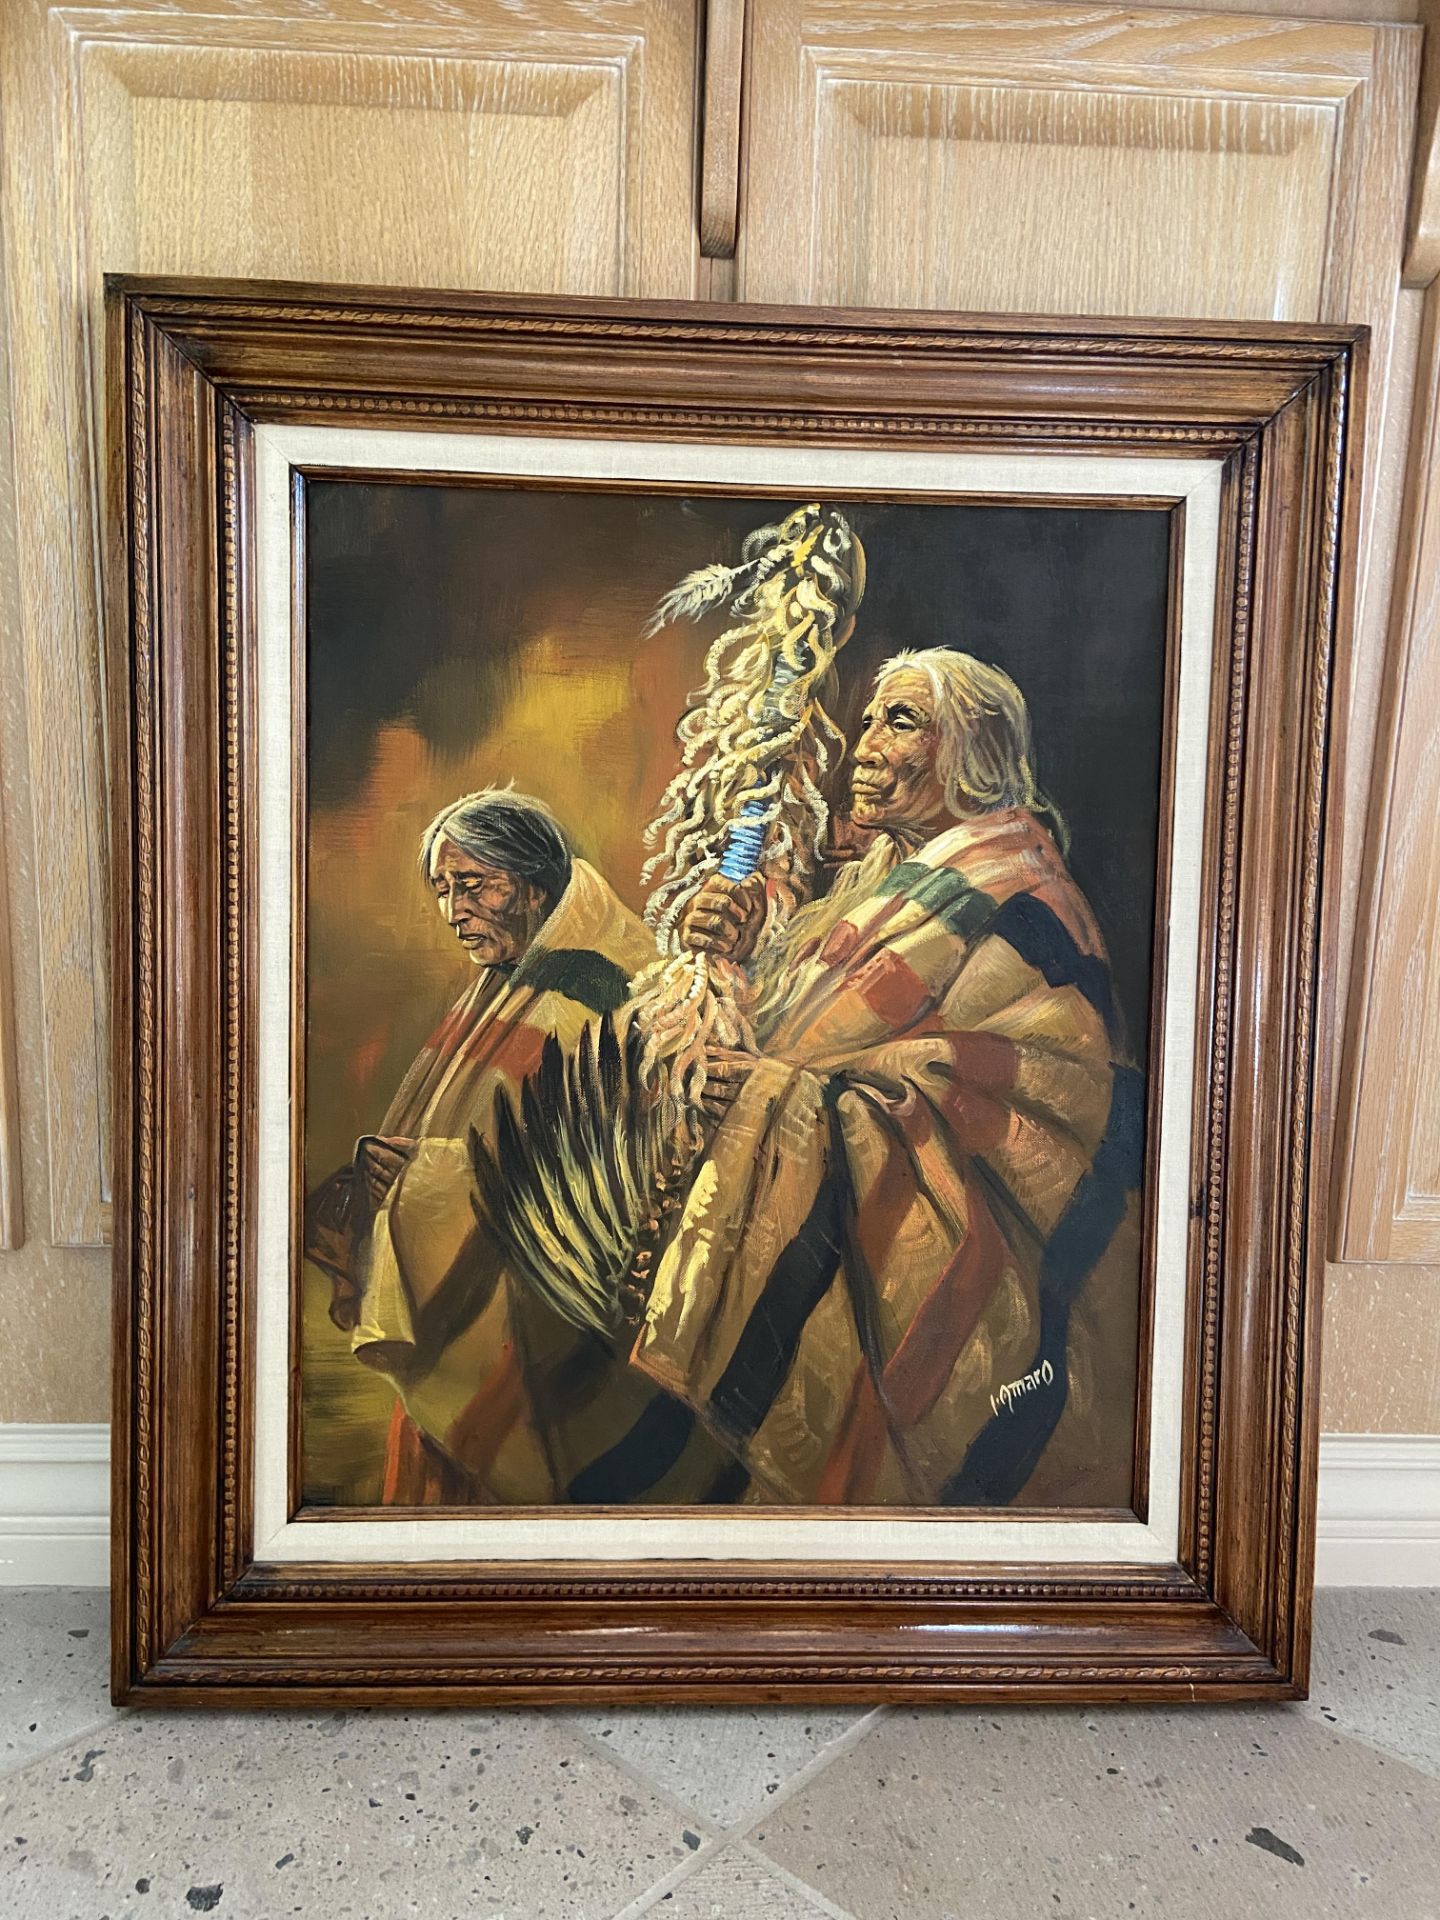 I AMARO Native American Art Painting Framed 32x28"